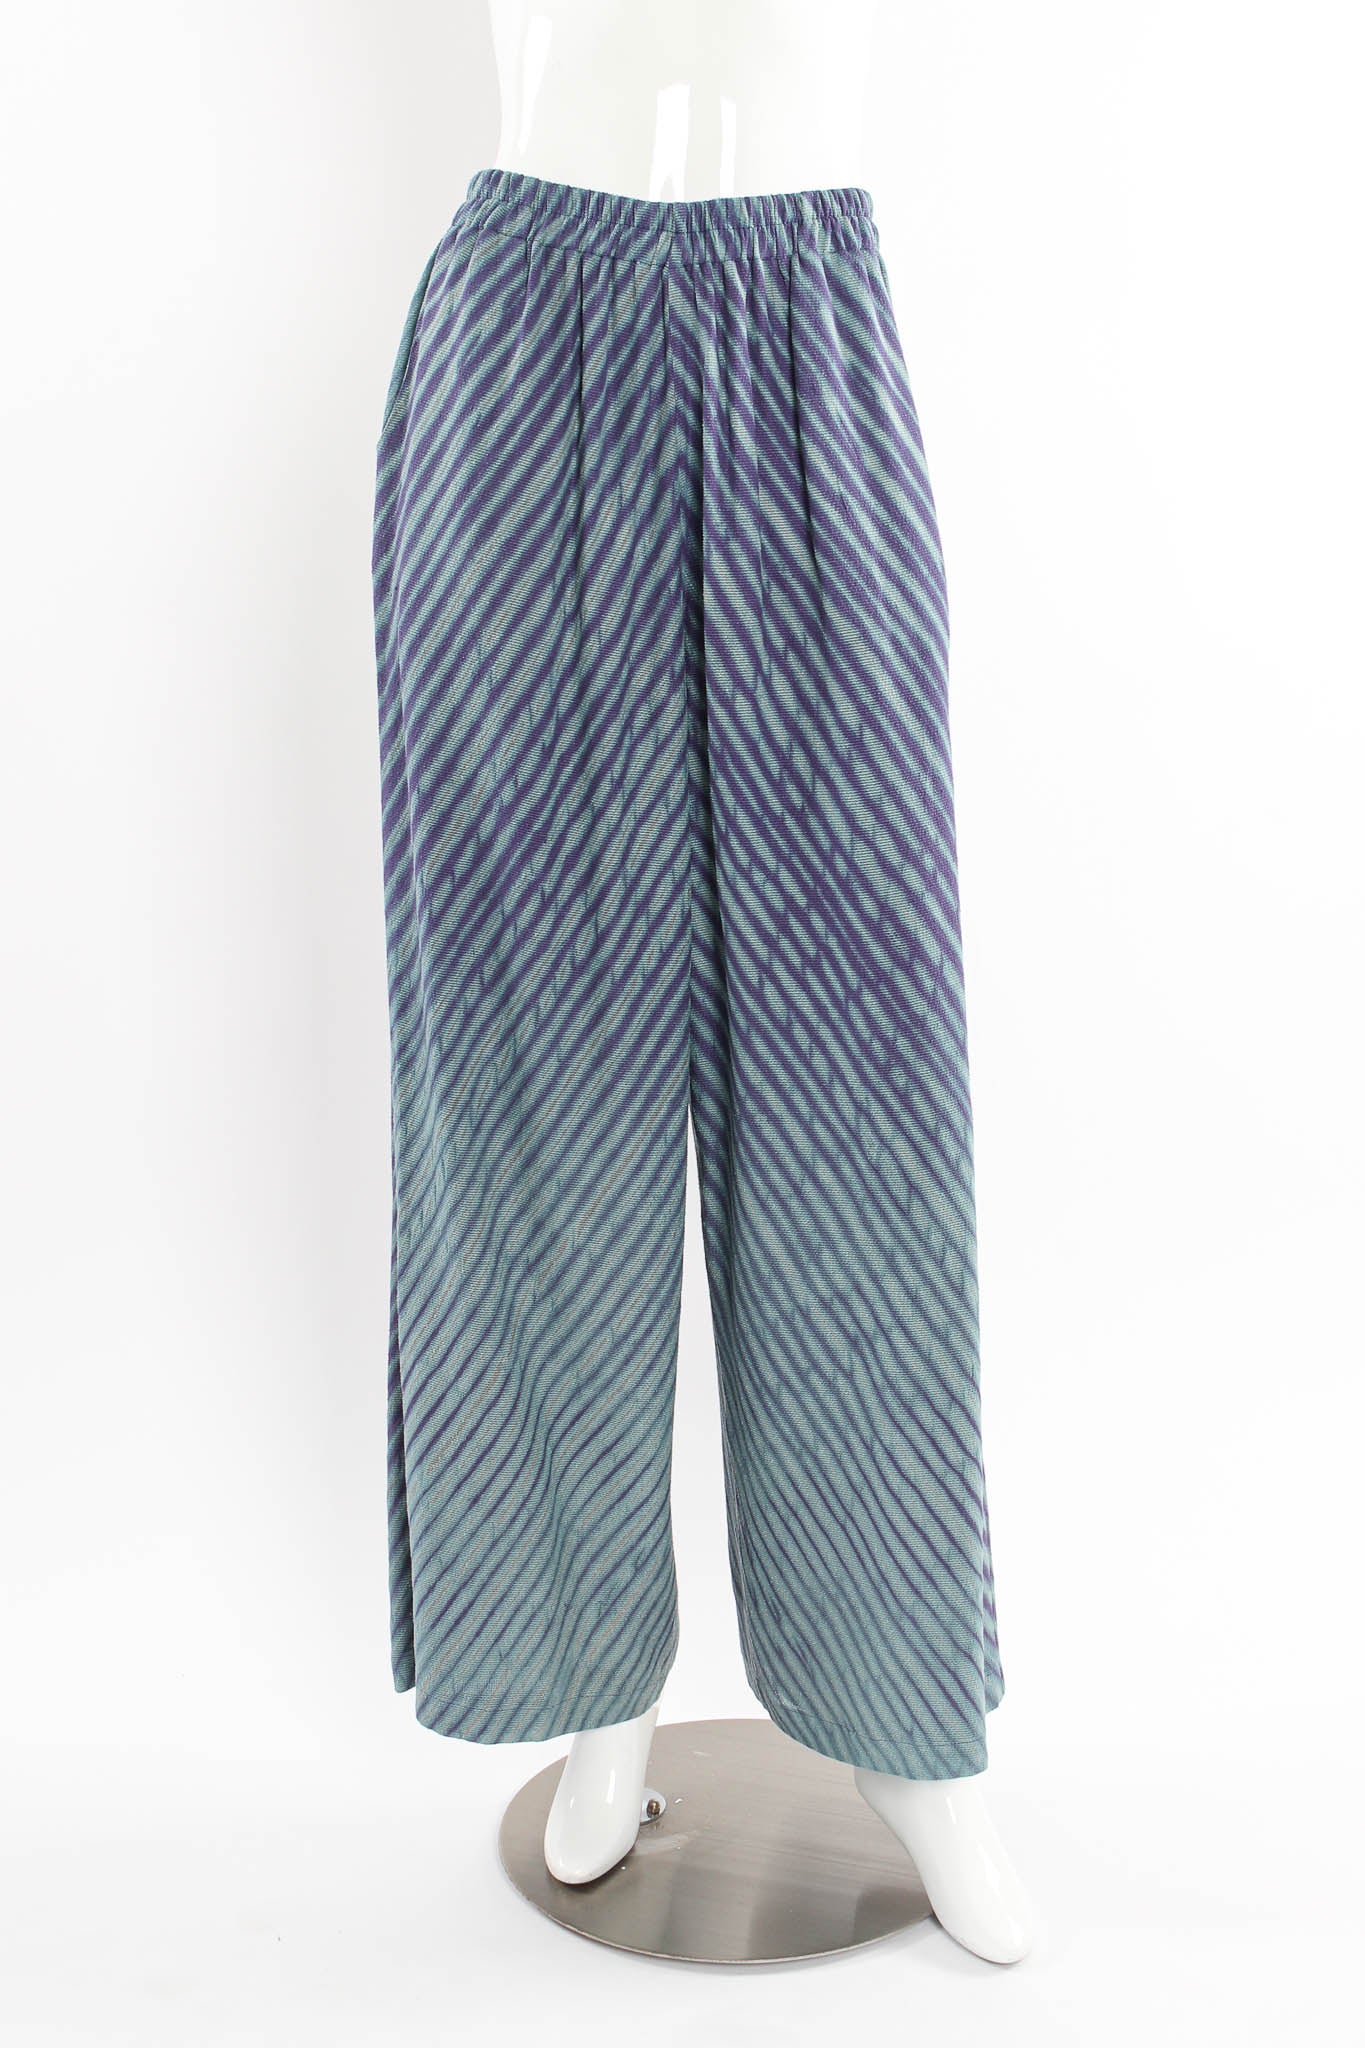 Vintage Joan McGee Tie-Dye Duster, Tank, & Pant (5 Piece Set) mannequin pant front @ Recess Los Angeles